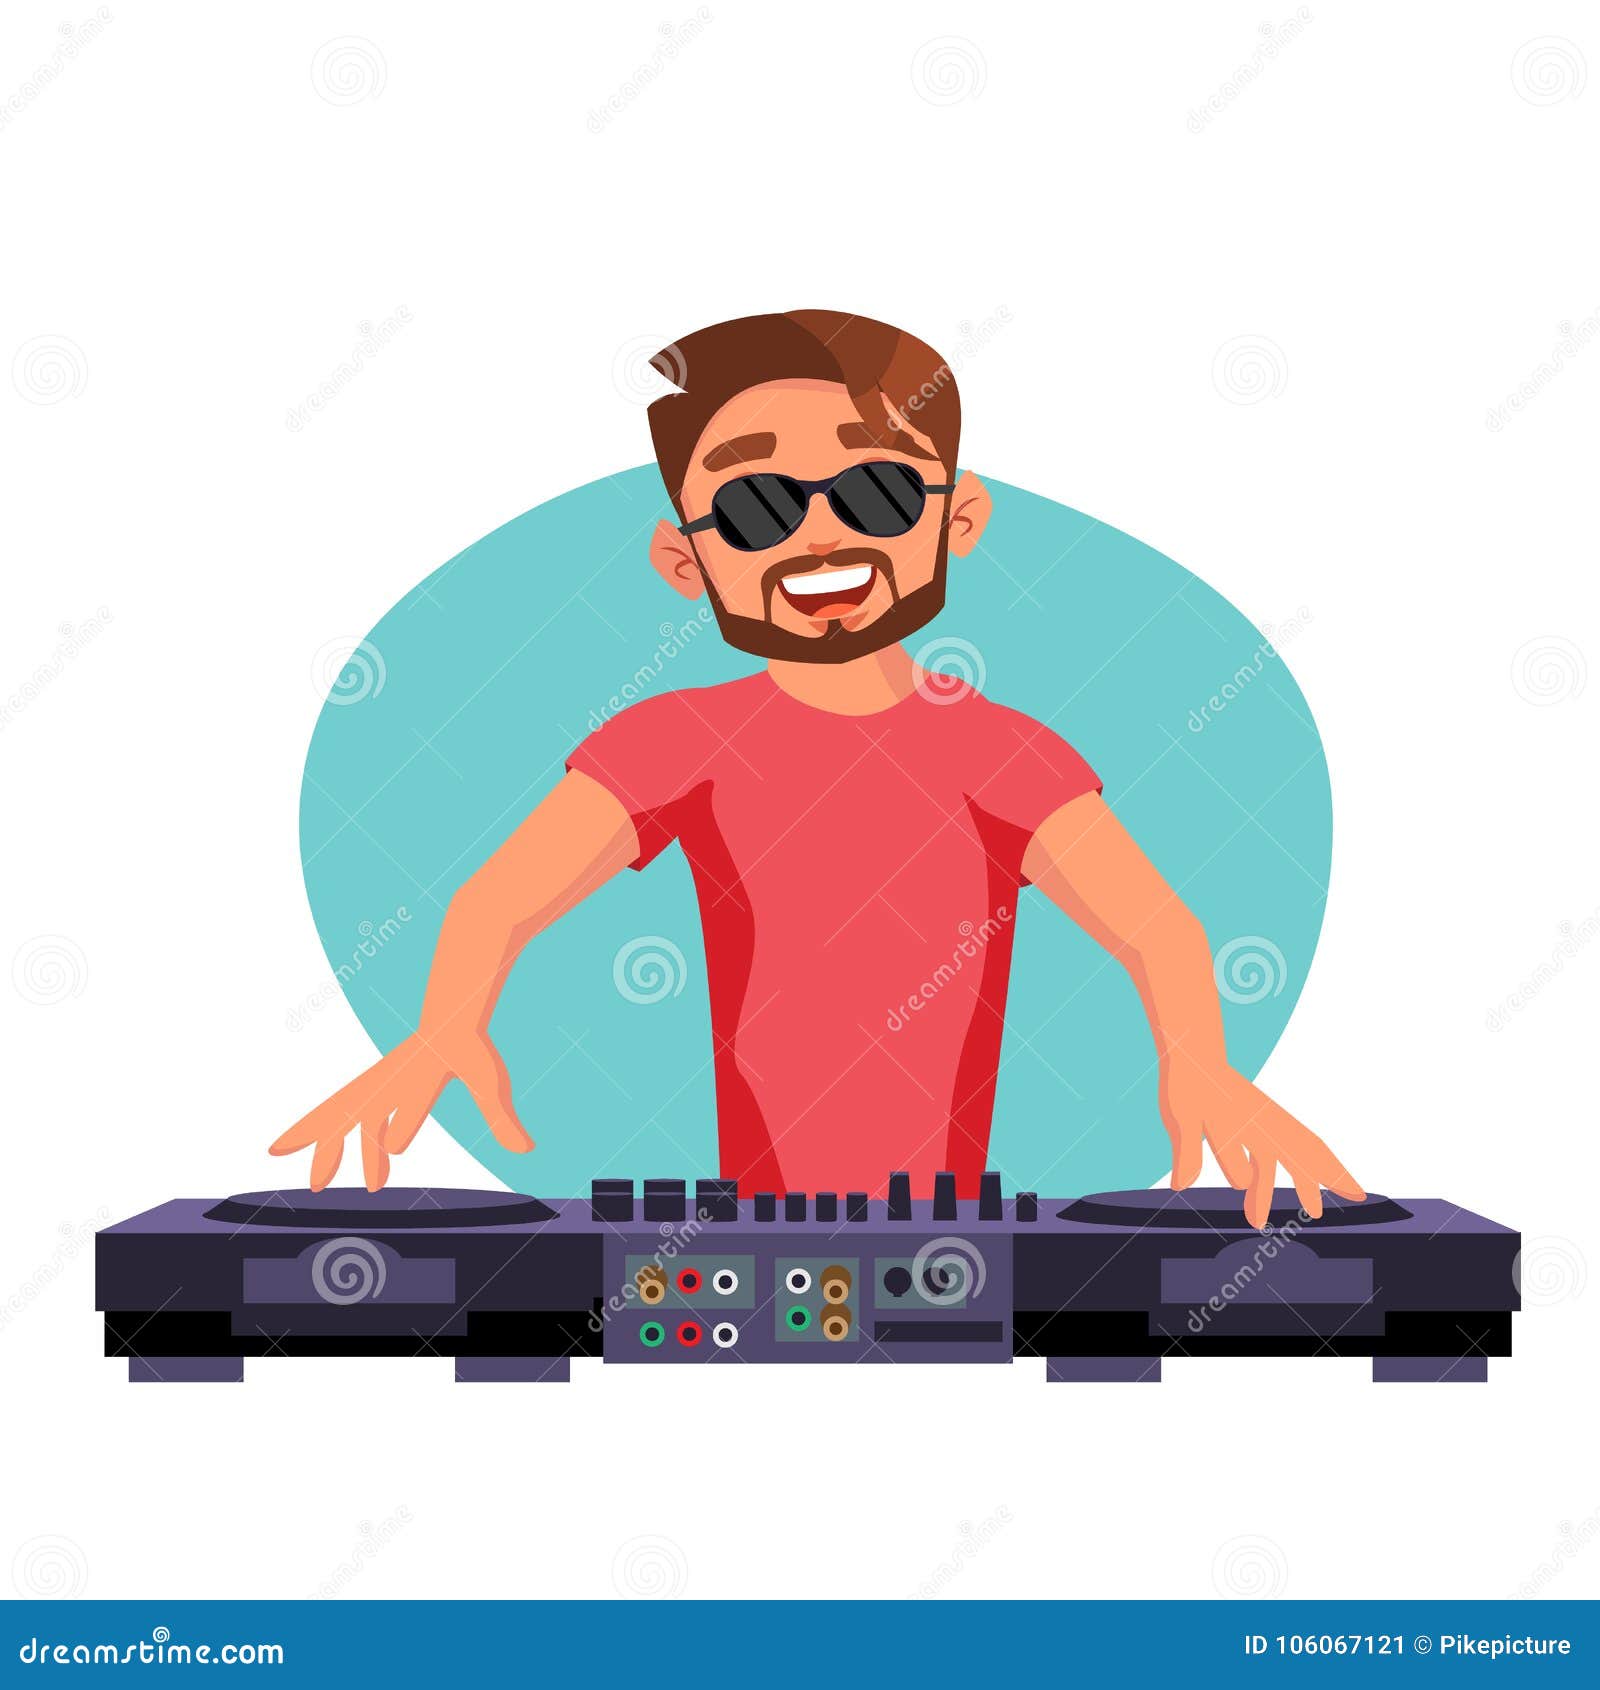 Classic Dj Vector. Playing Progressive Electro Music. Dj Playing, Mixing  Music on Deck. Studio Concept. Cartoon Stock Vector - Illustration of hand,  electronic: 106067121